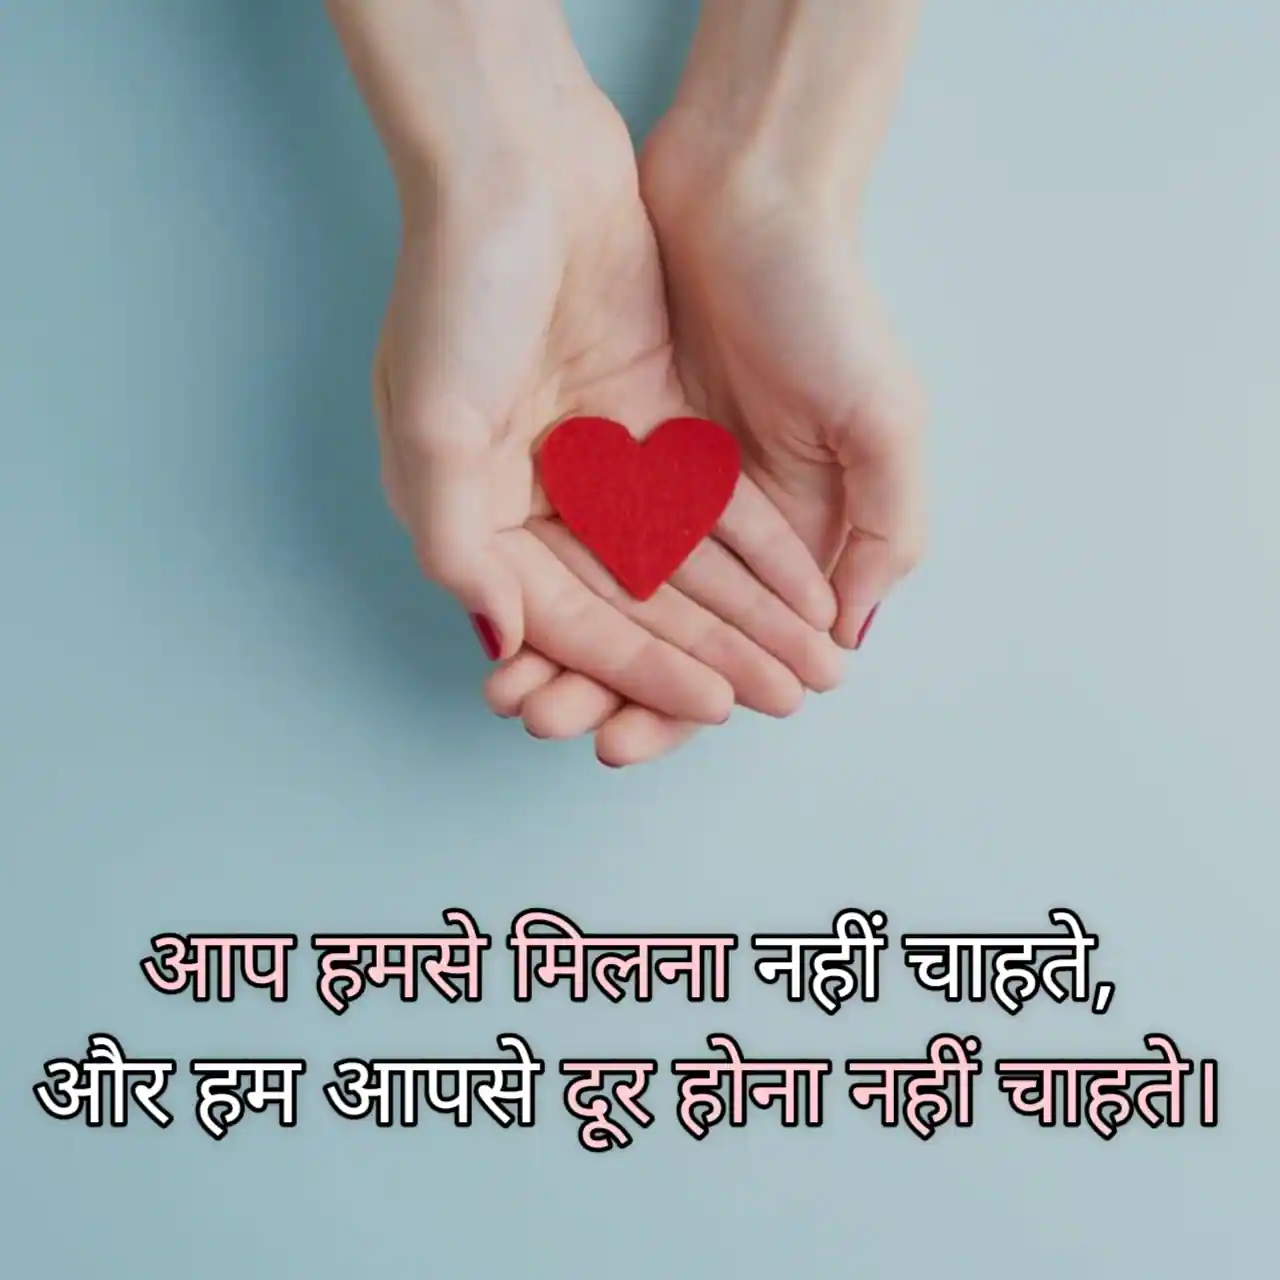 Red Heart in girl hand with Hindi Shayari